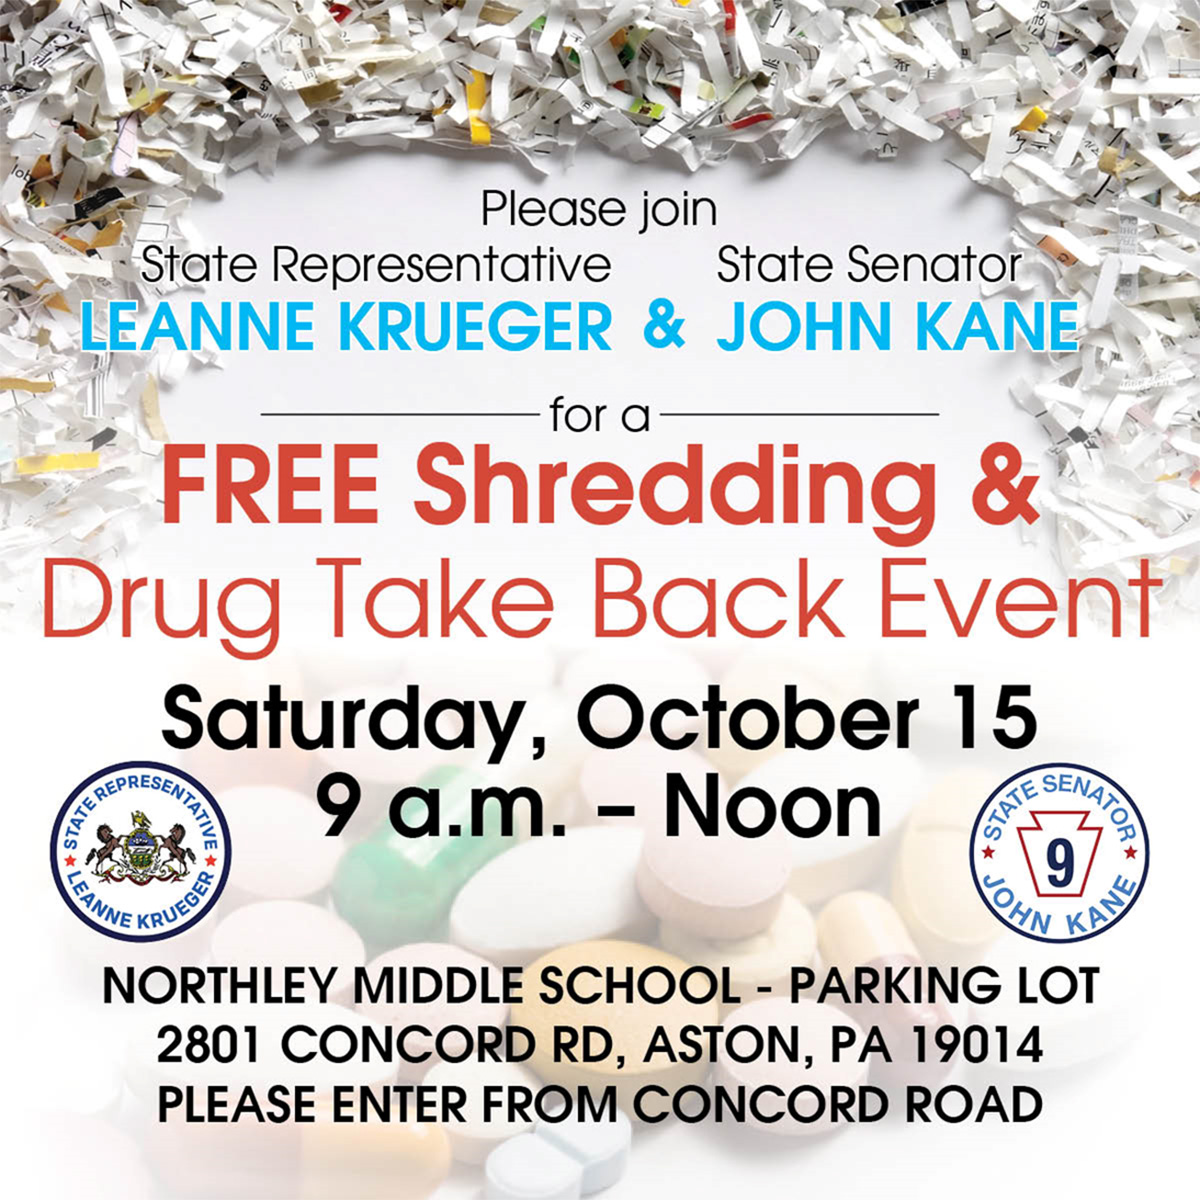 FREE Shredding & Drug Take Back Event